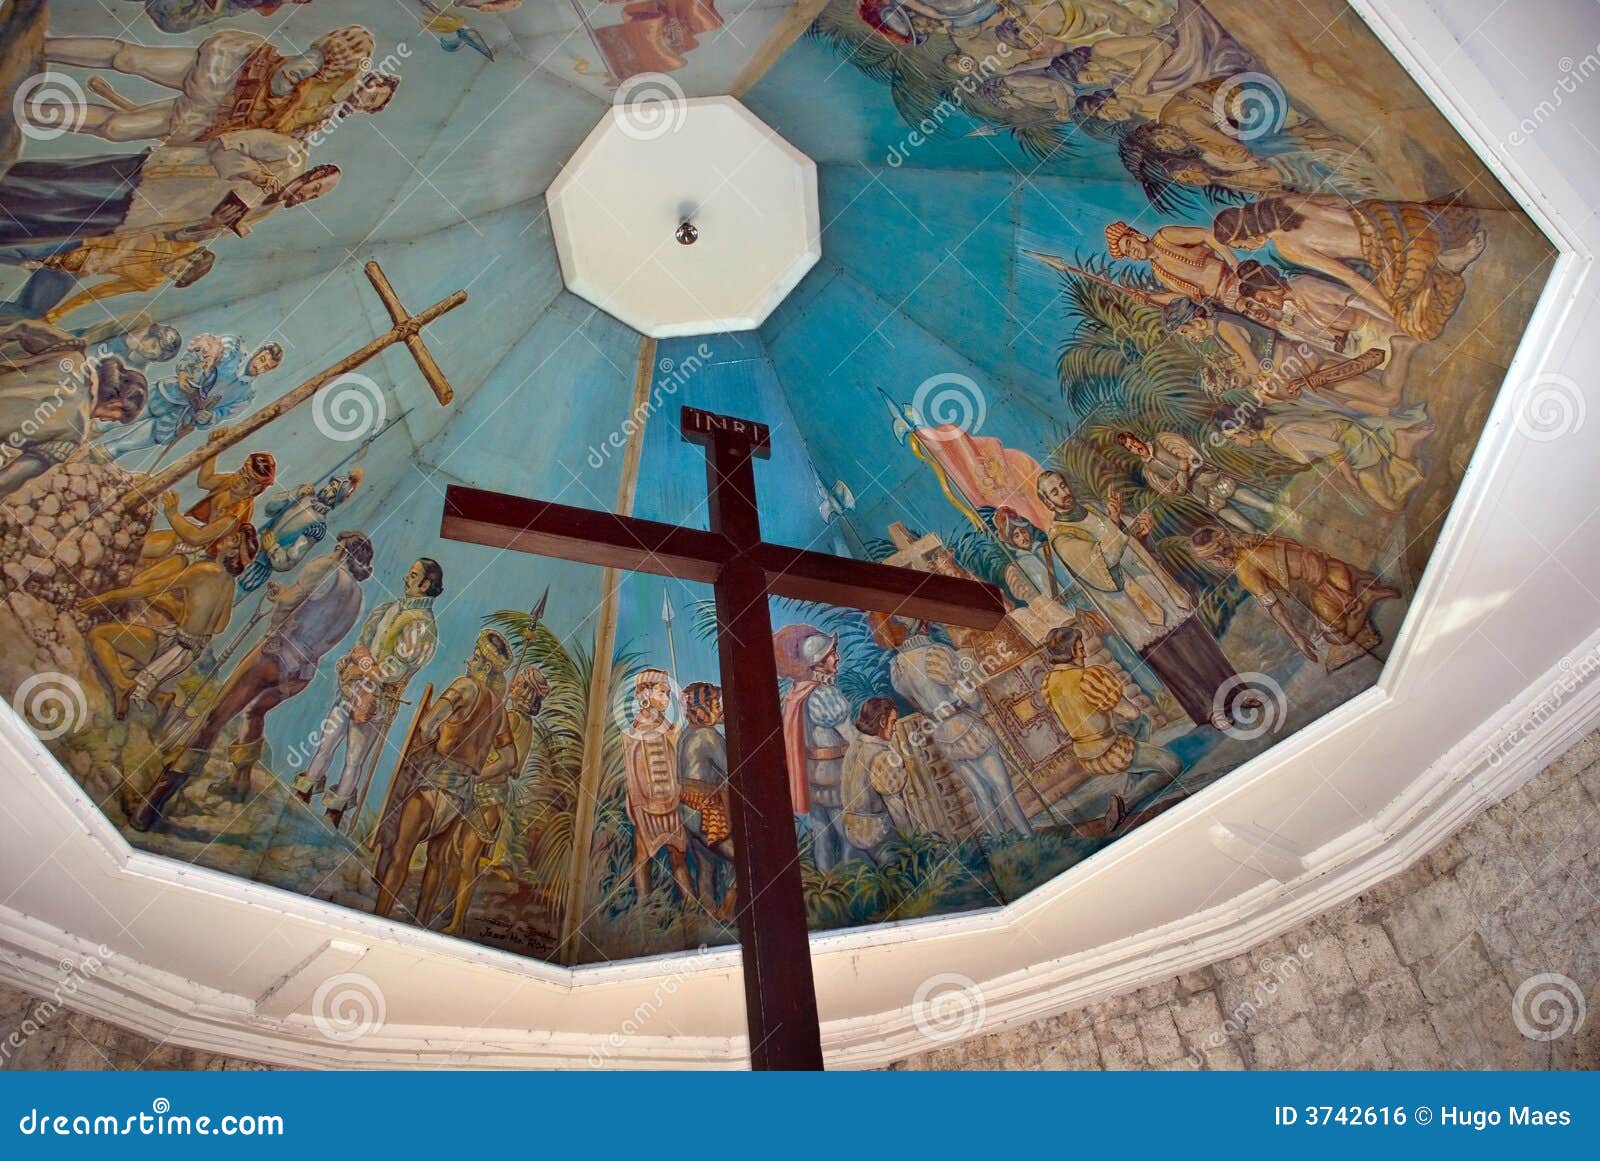 cebu historic landmark: magellan's cross